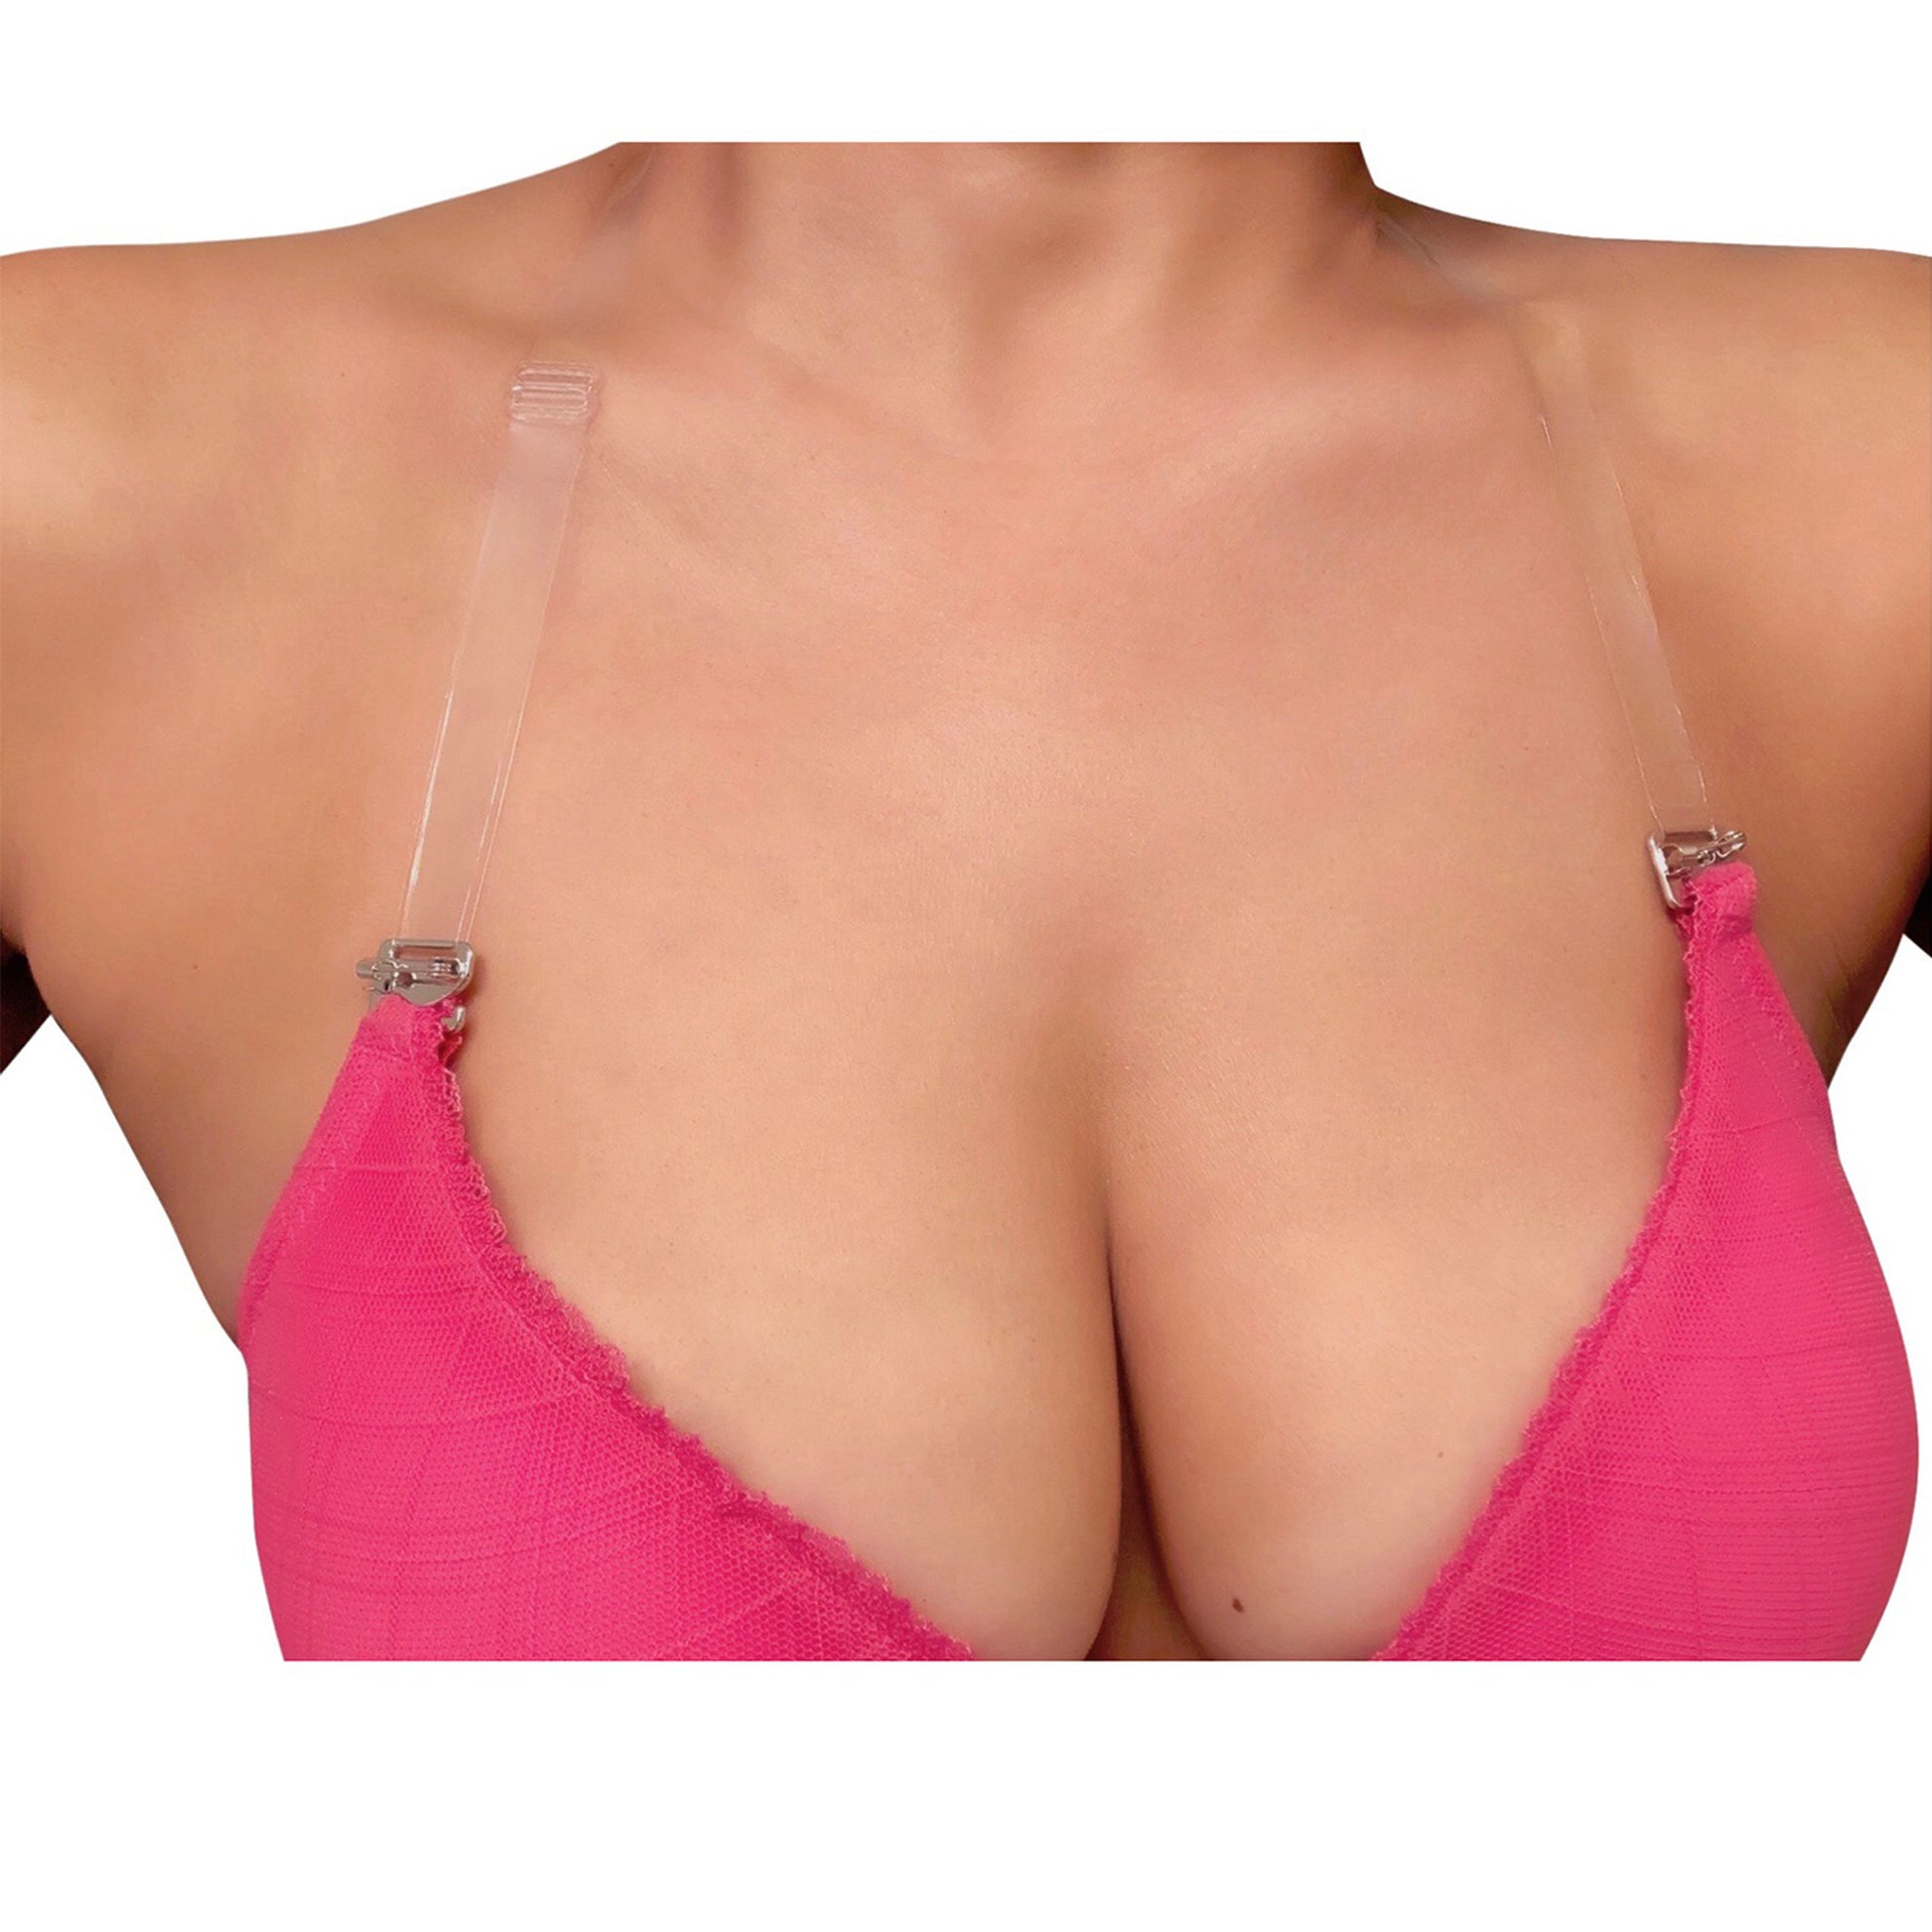 Pin Straps (No Slip) Halter Straps for Bras, Swimsuits, Dresses, Women's, Size: 12mm Width, White